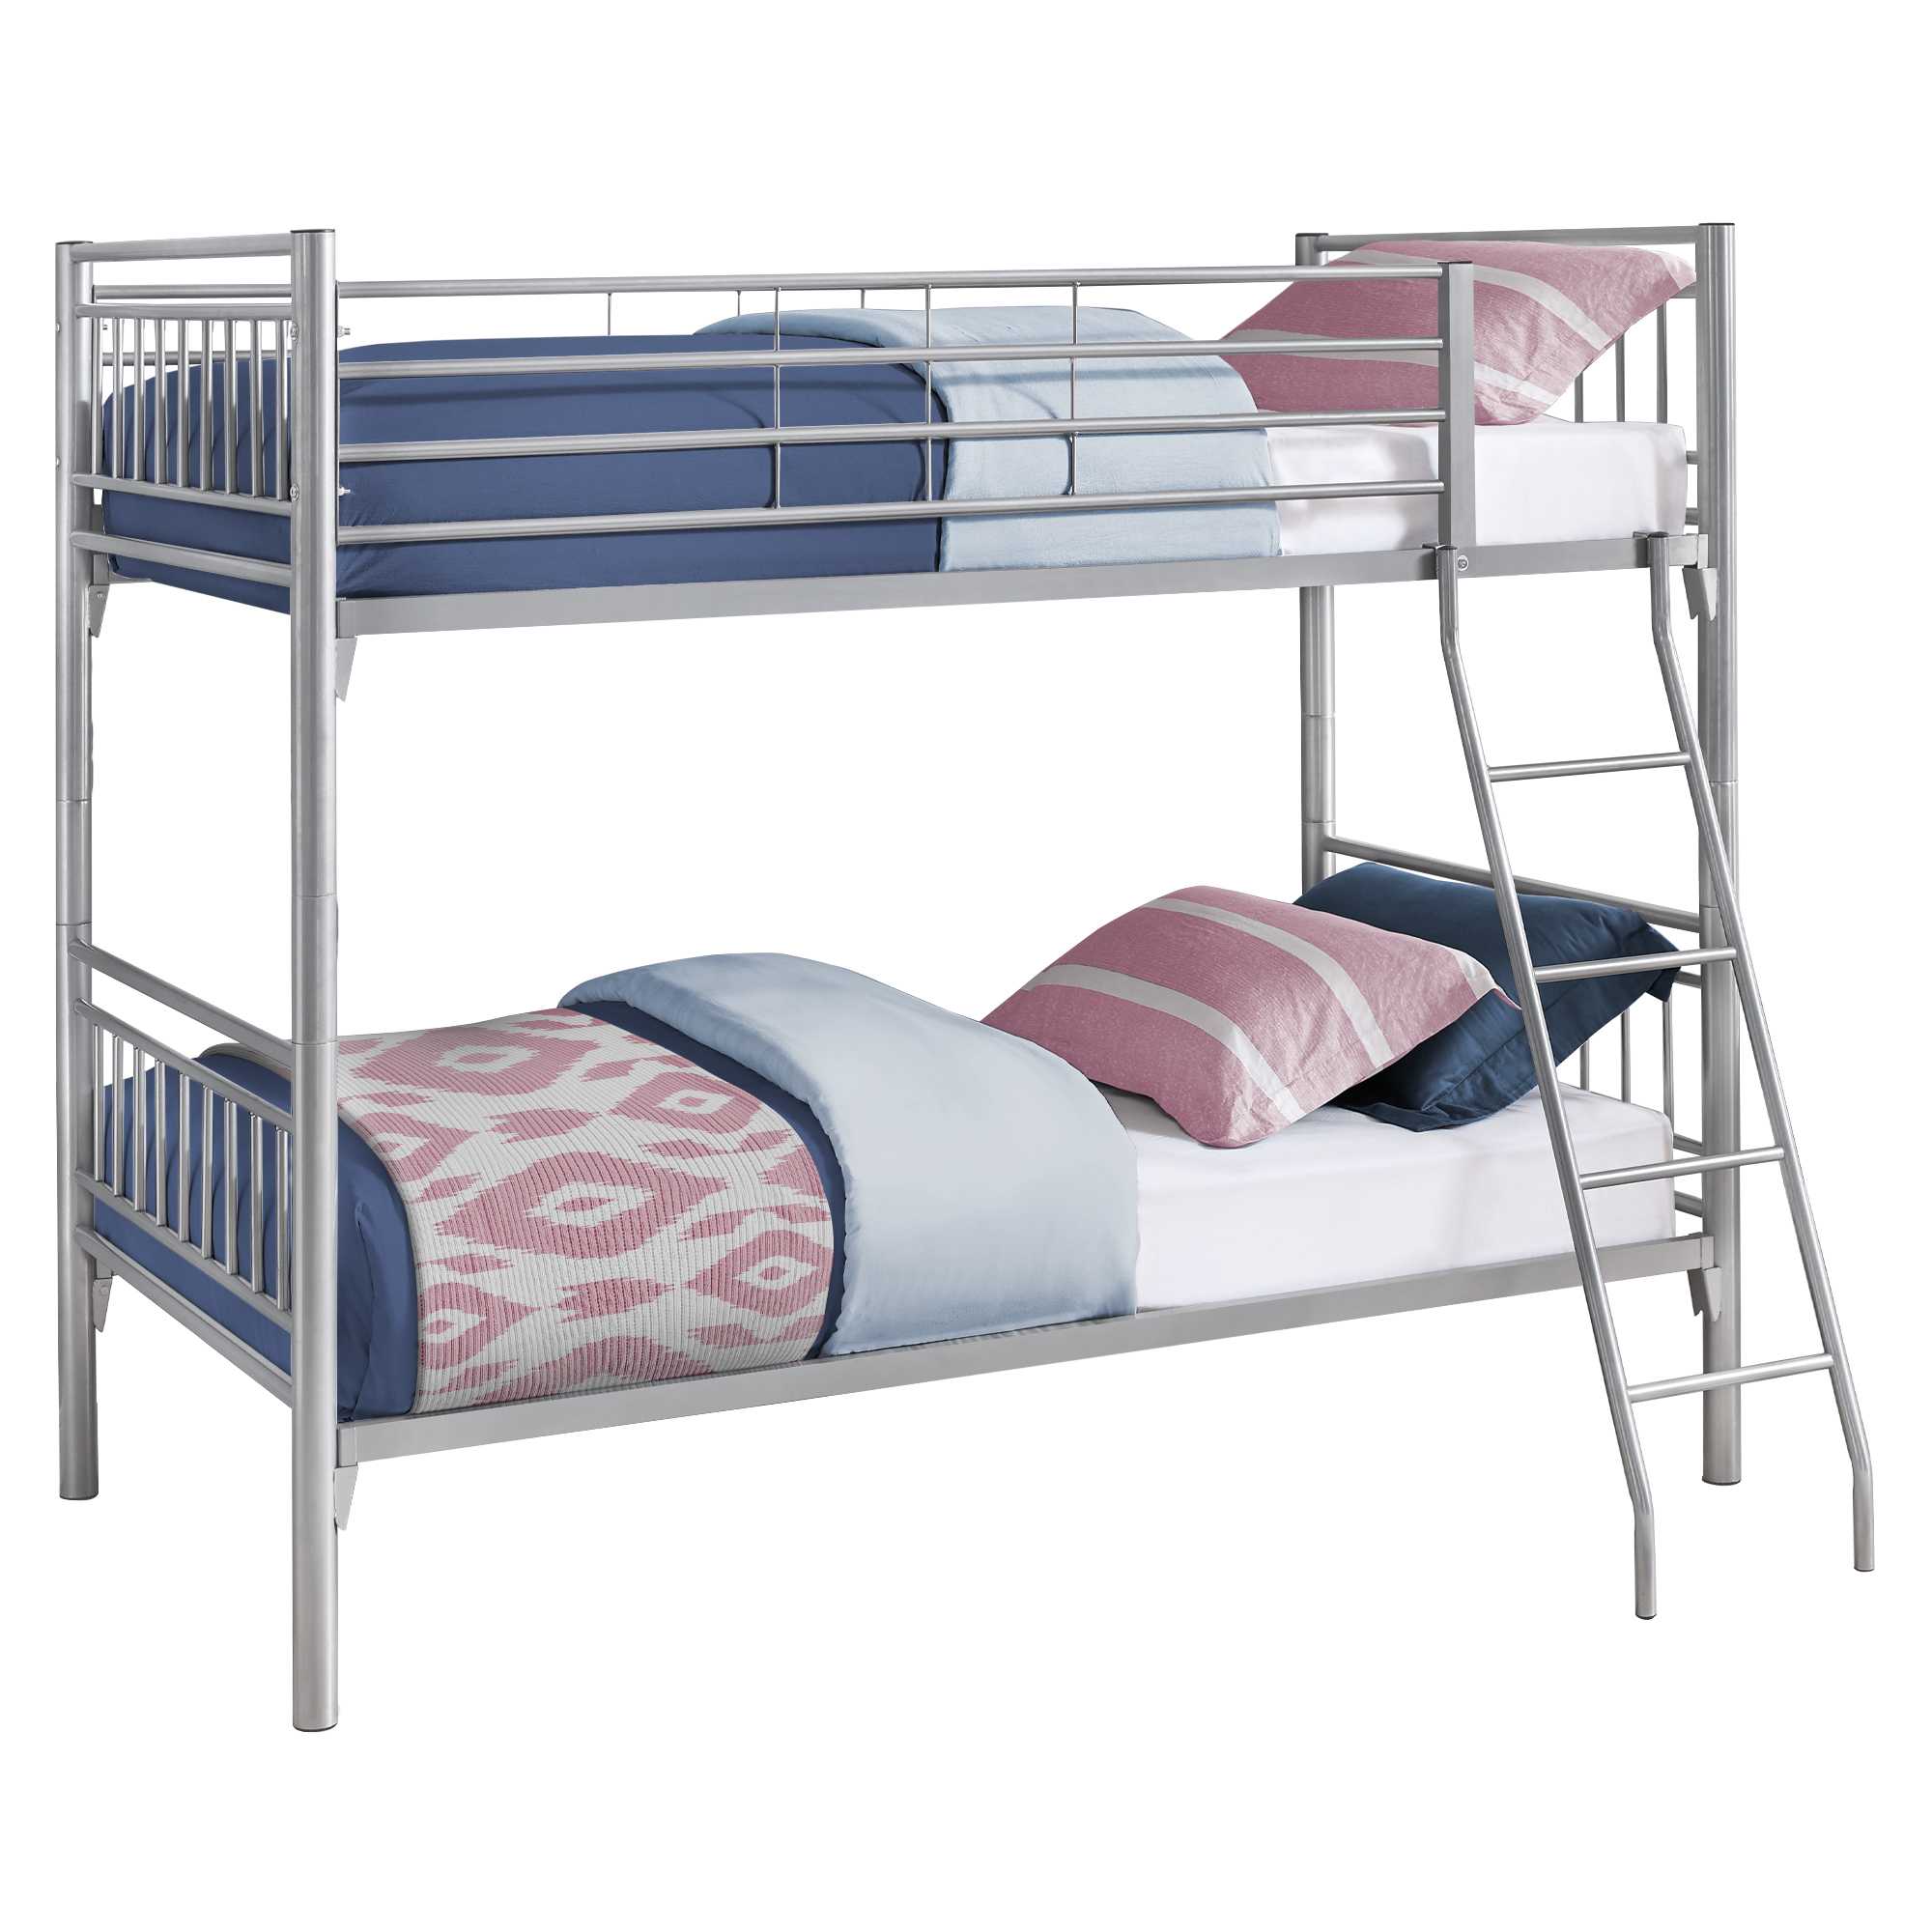 56.75" x 78.5" x 65.75" Silver Metal Detachable Bunk Bed Twin Size